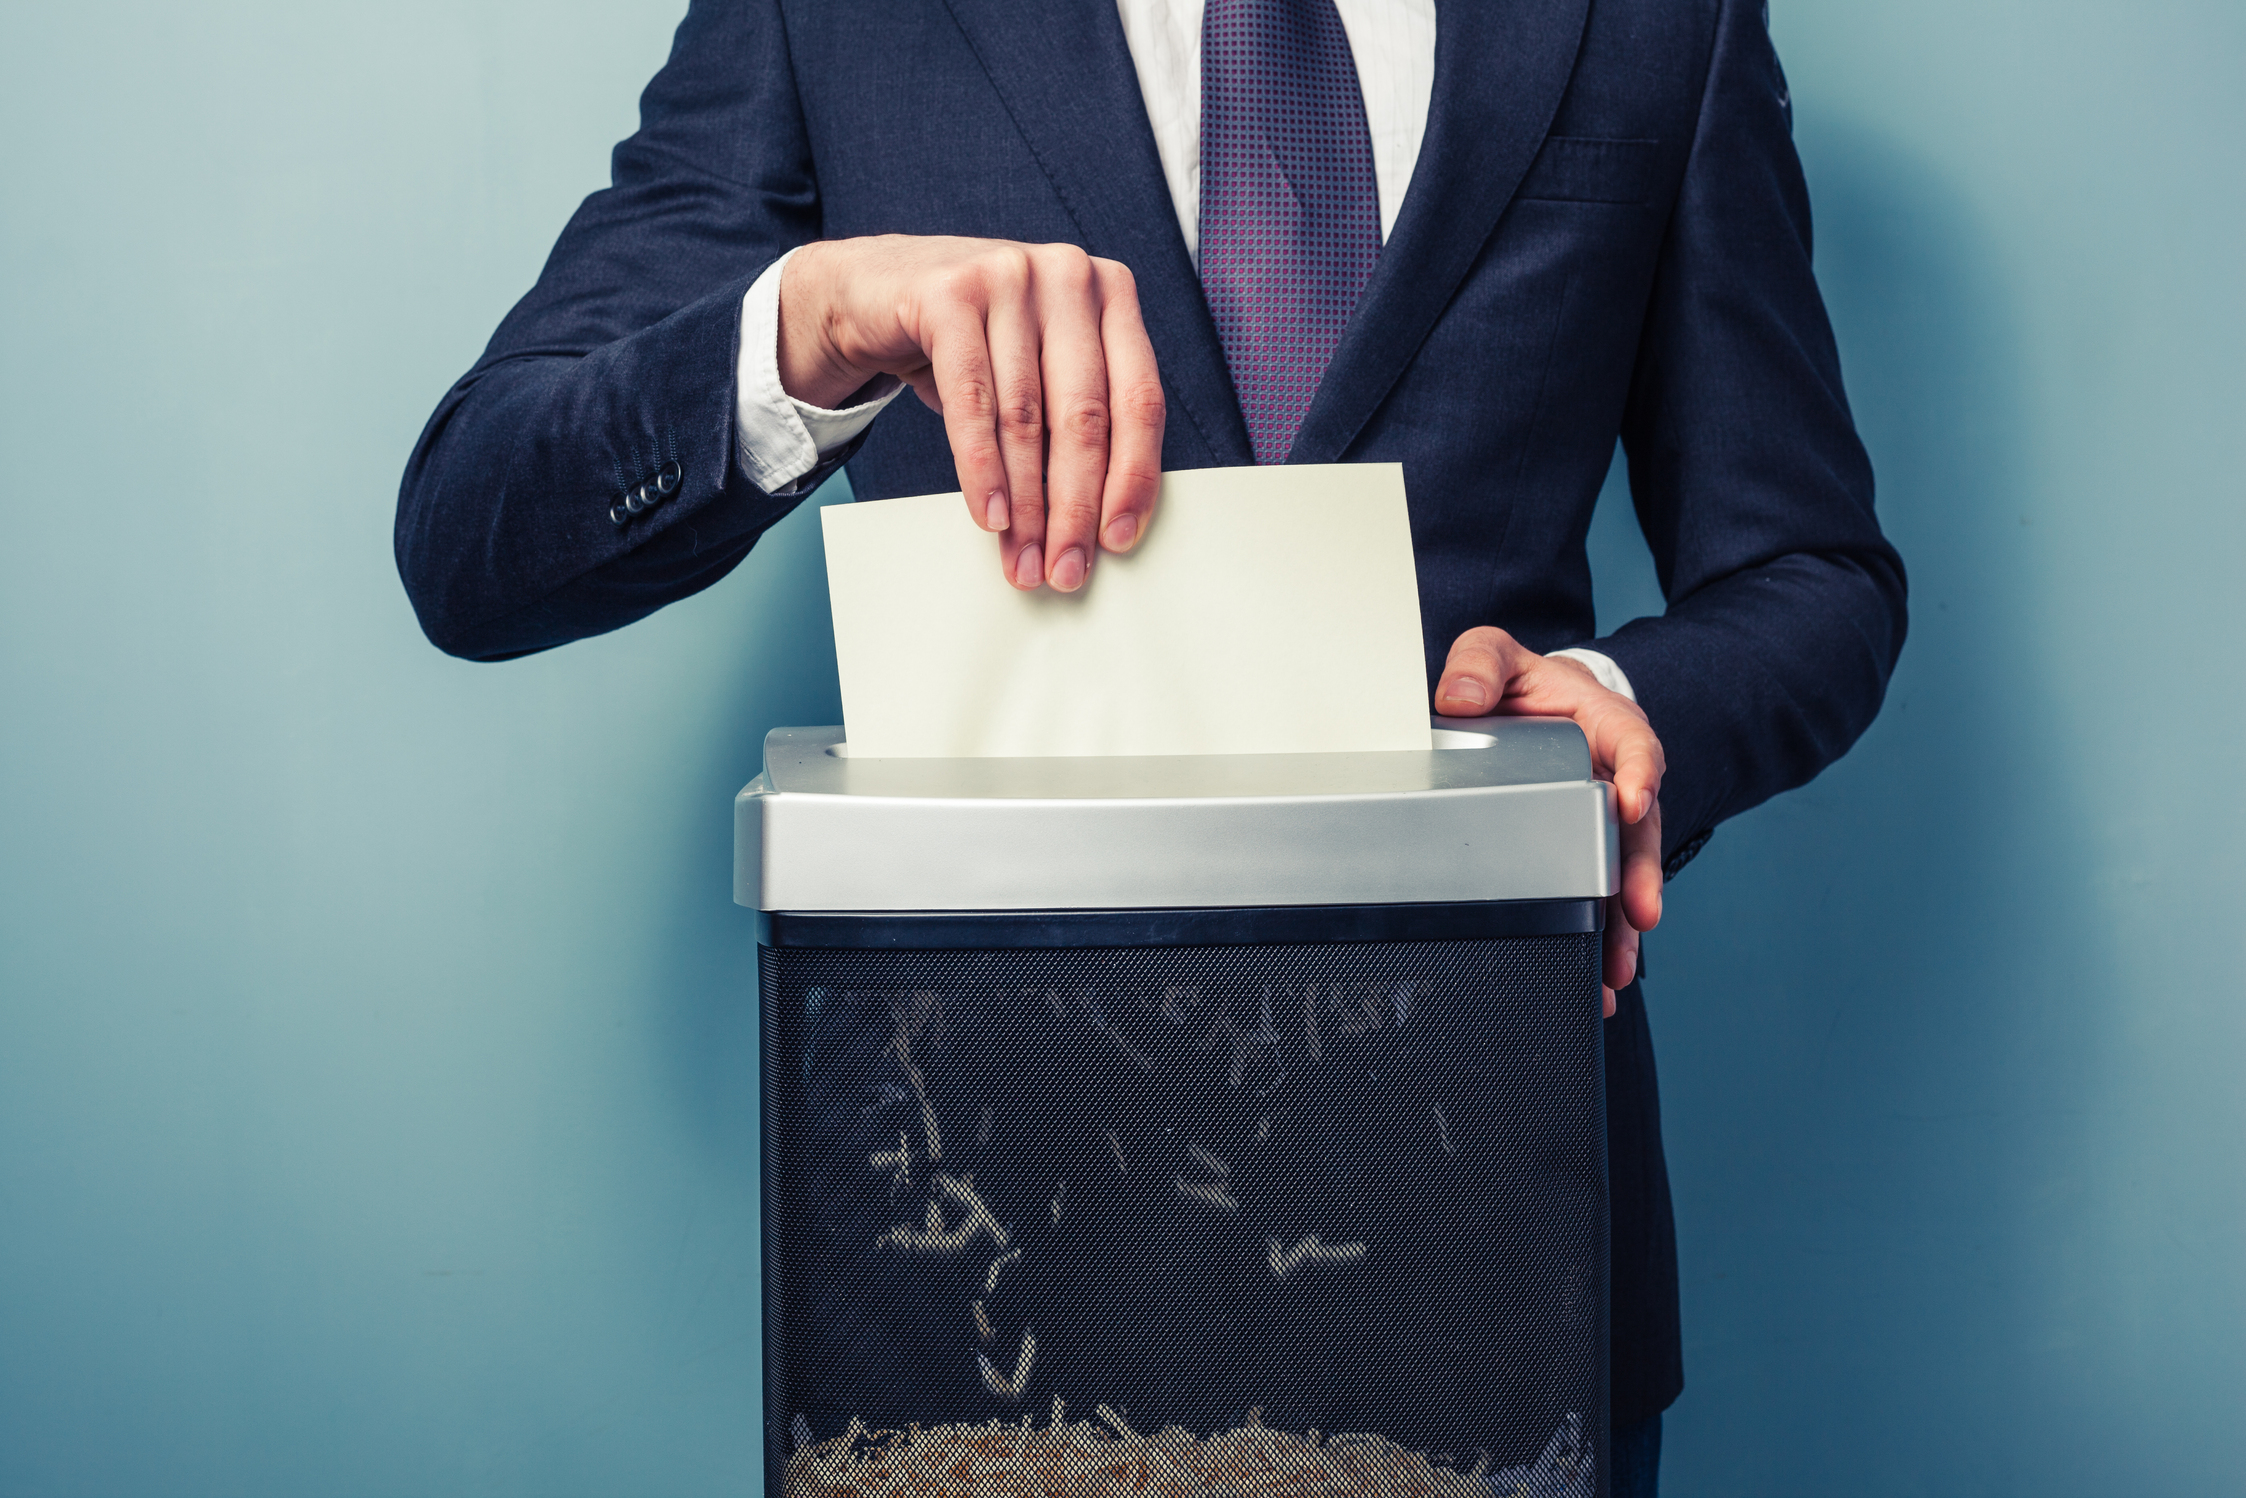 Man wearing suit shredding document